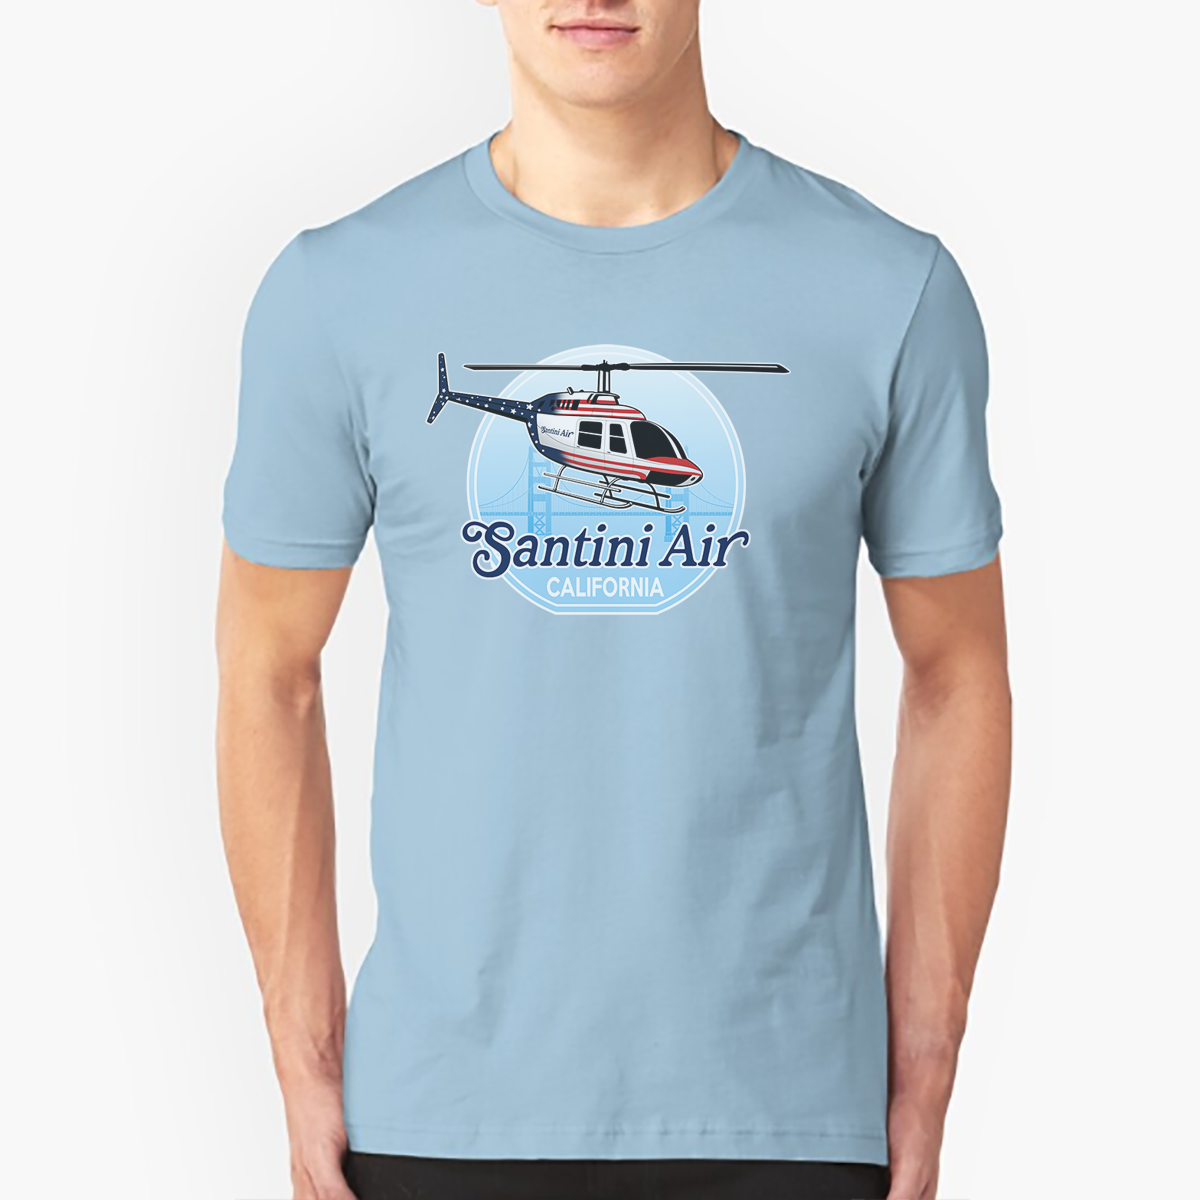 SANTINI AIR CALIFORNIA T-Shirt